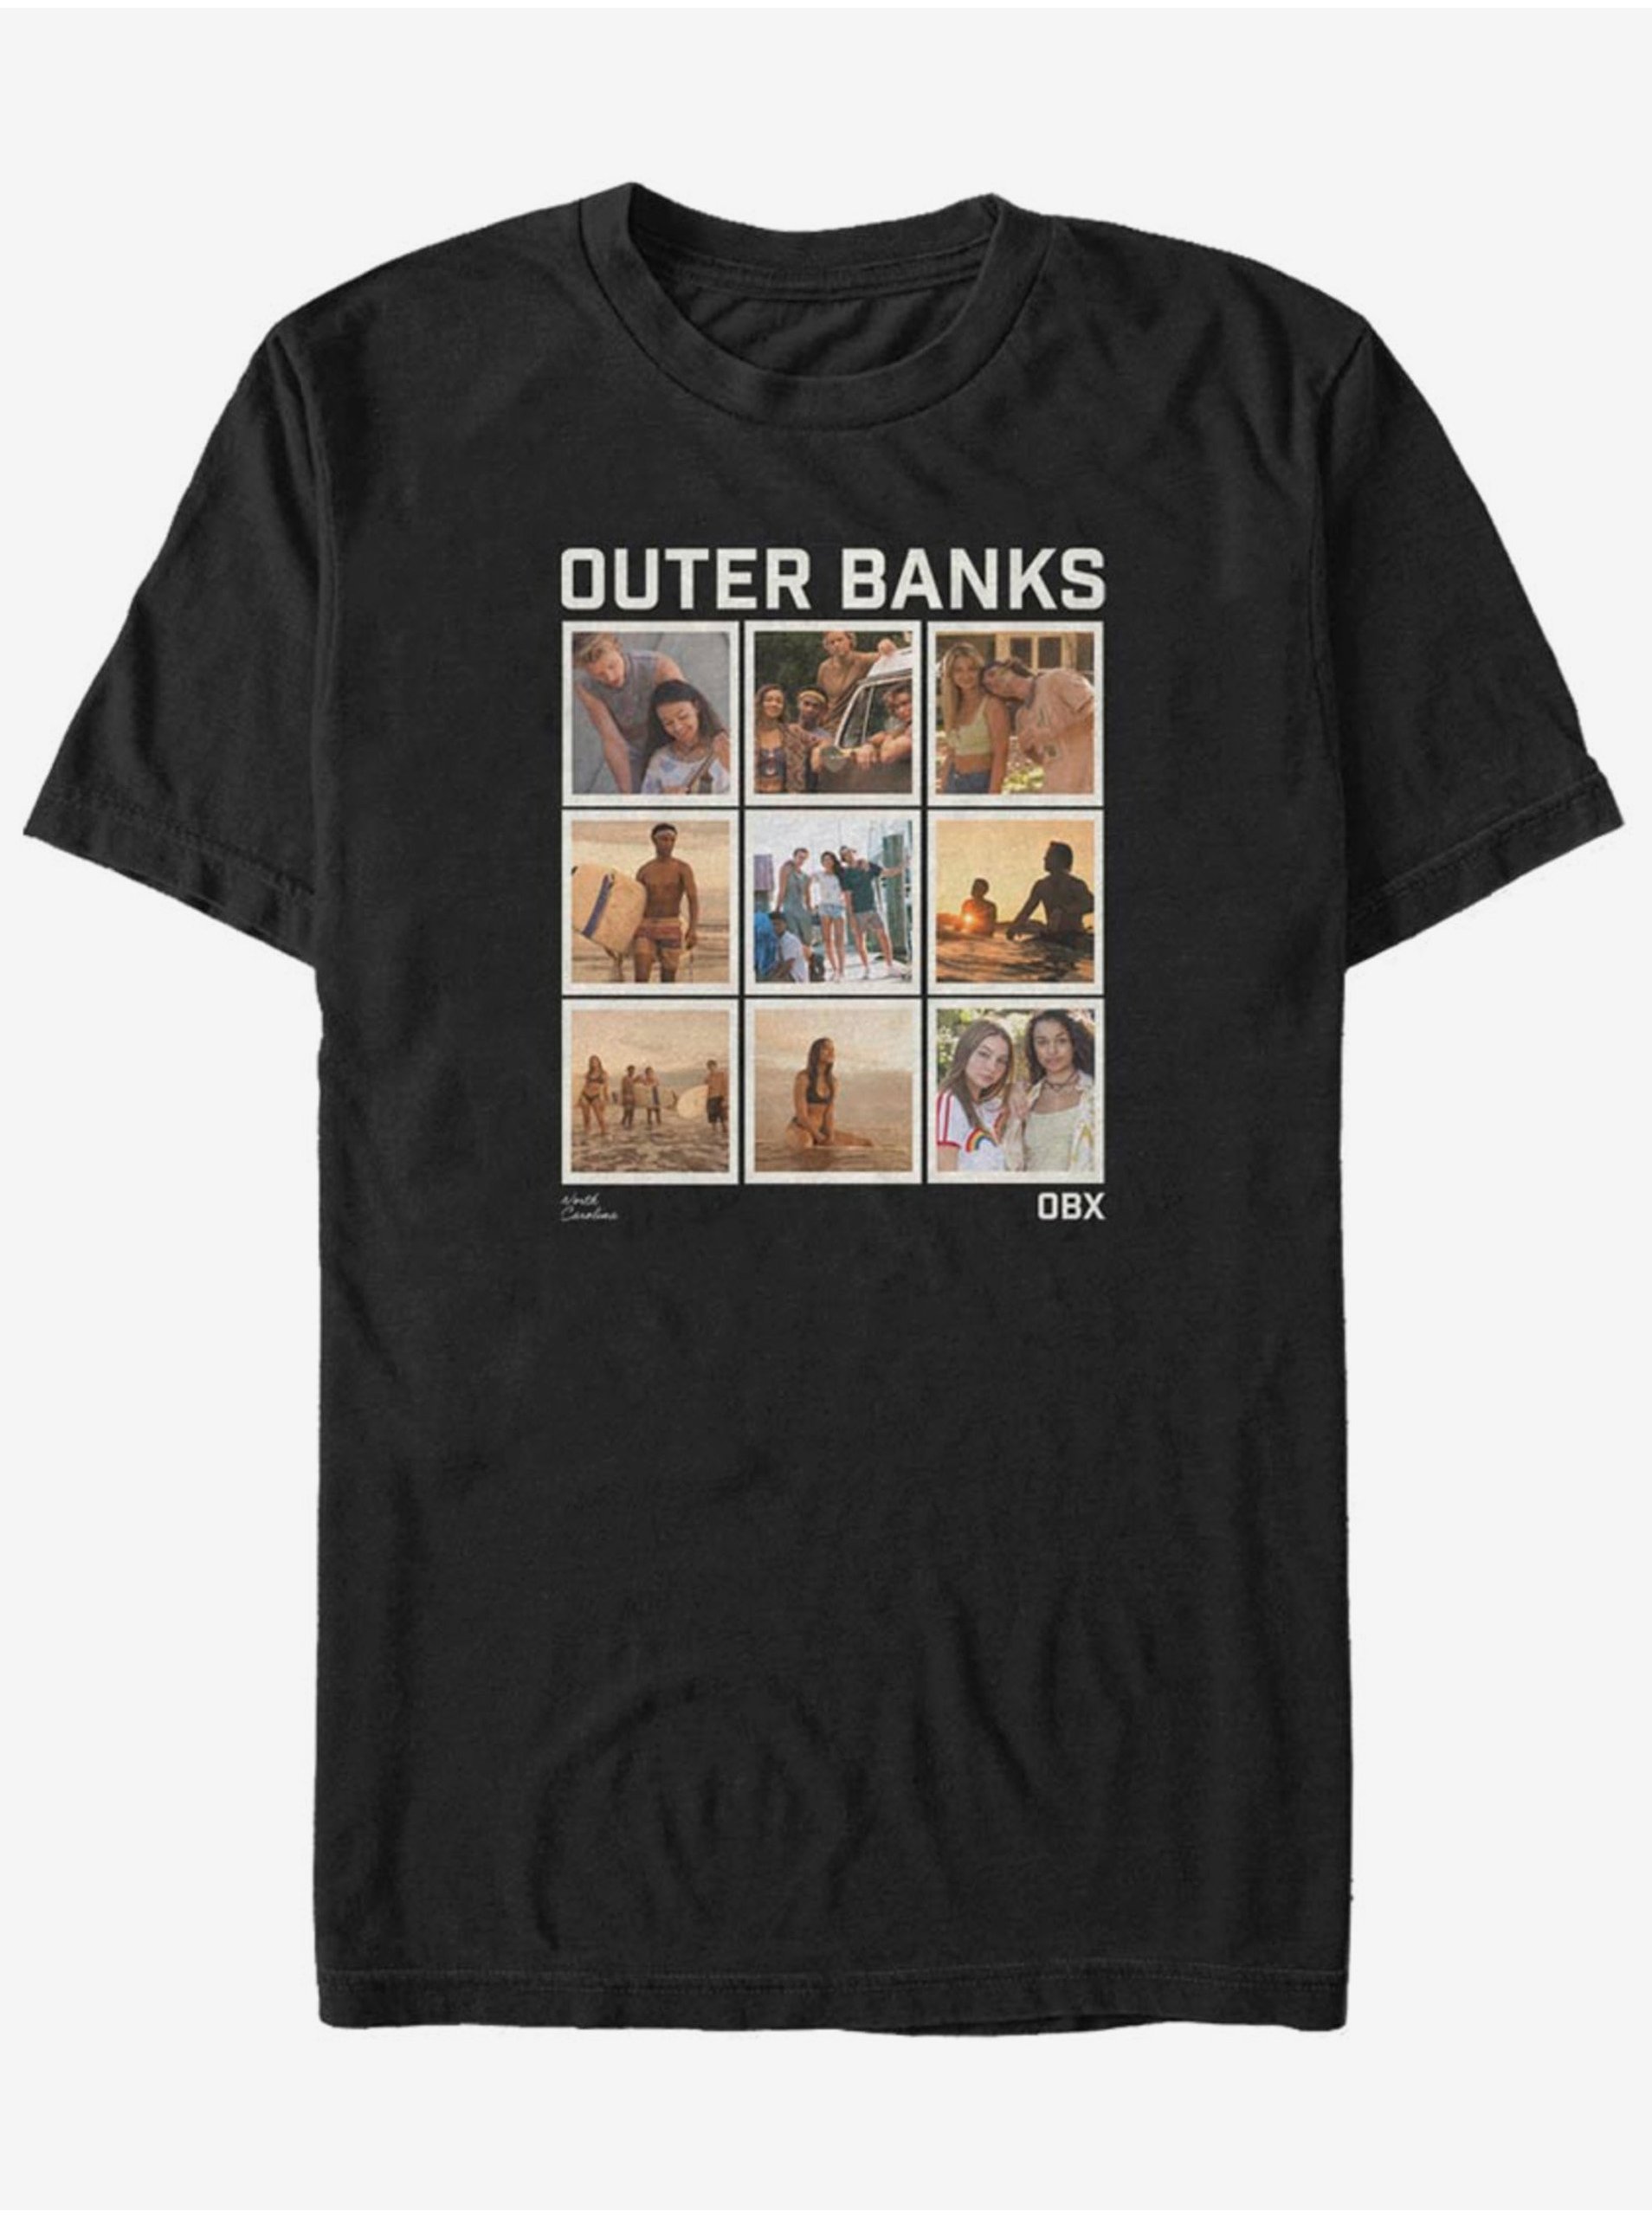 Lacno Postavy Outer Banks ZOOT. FAN Netflix - unisex tričko